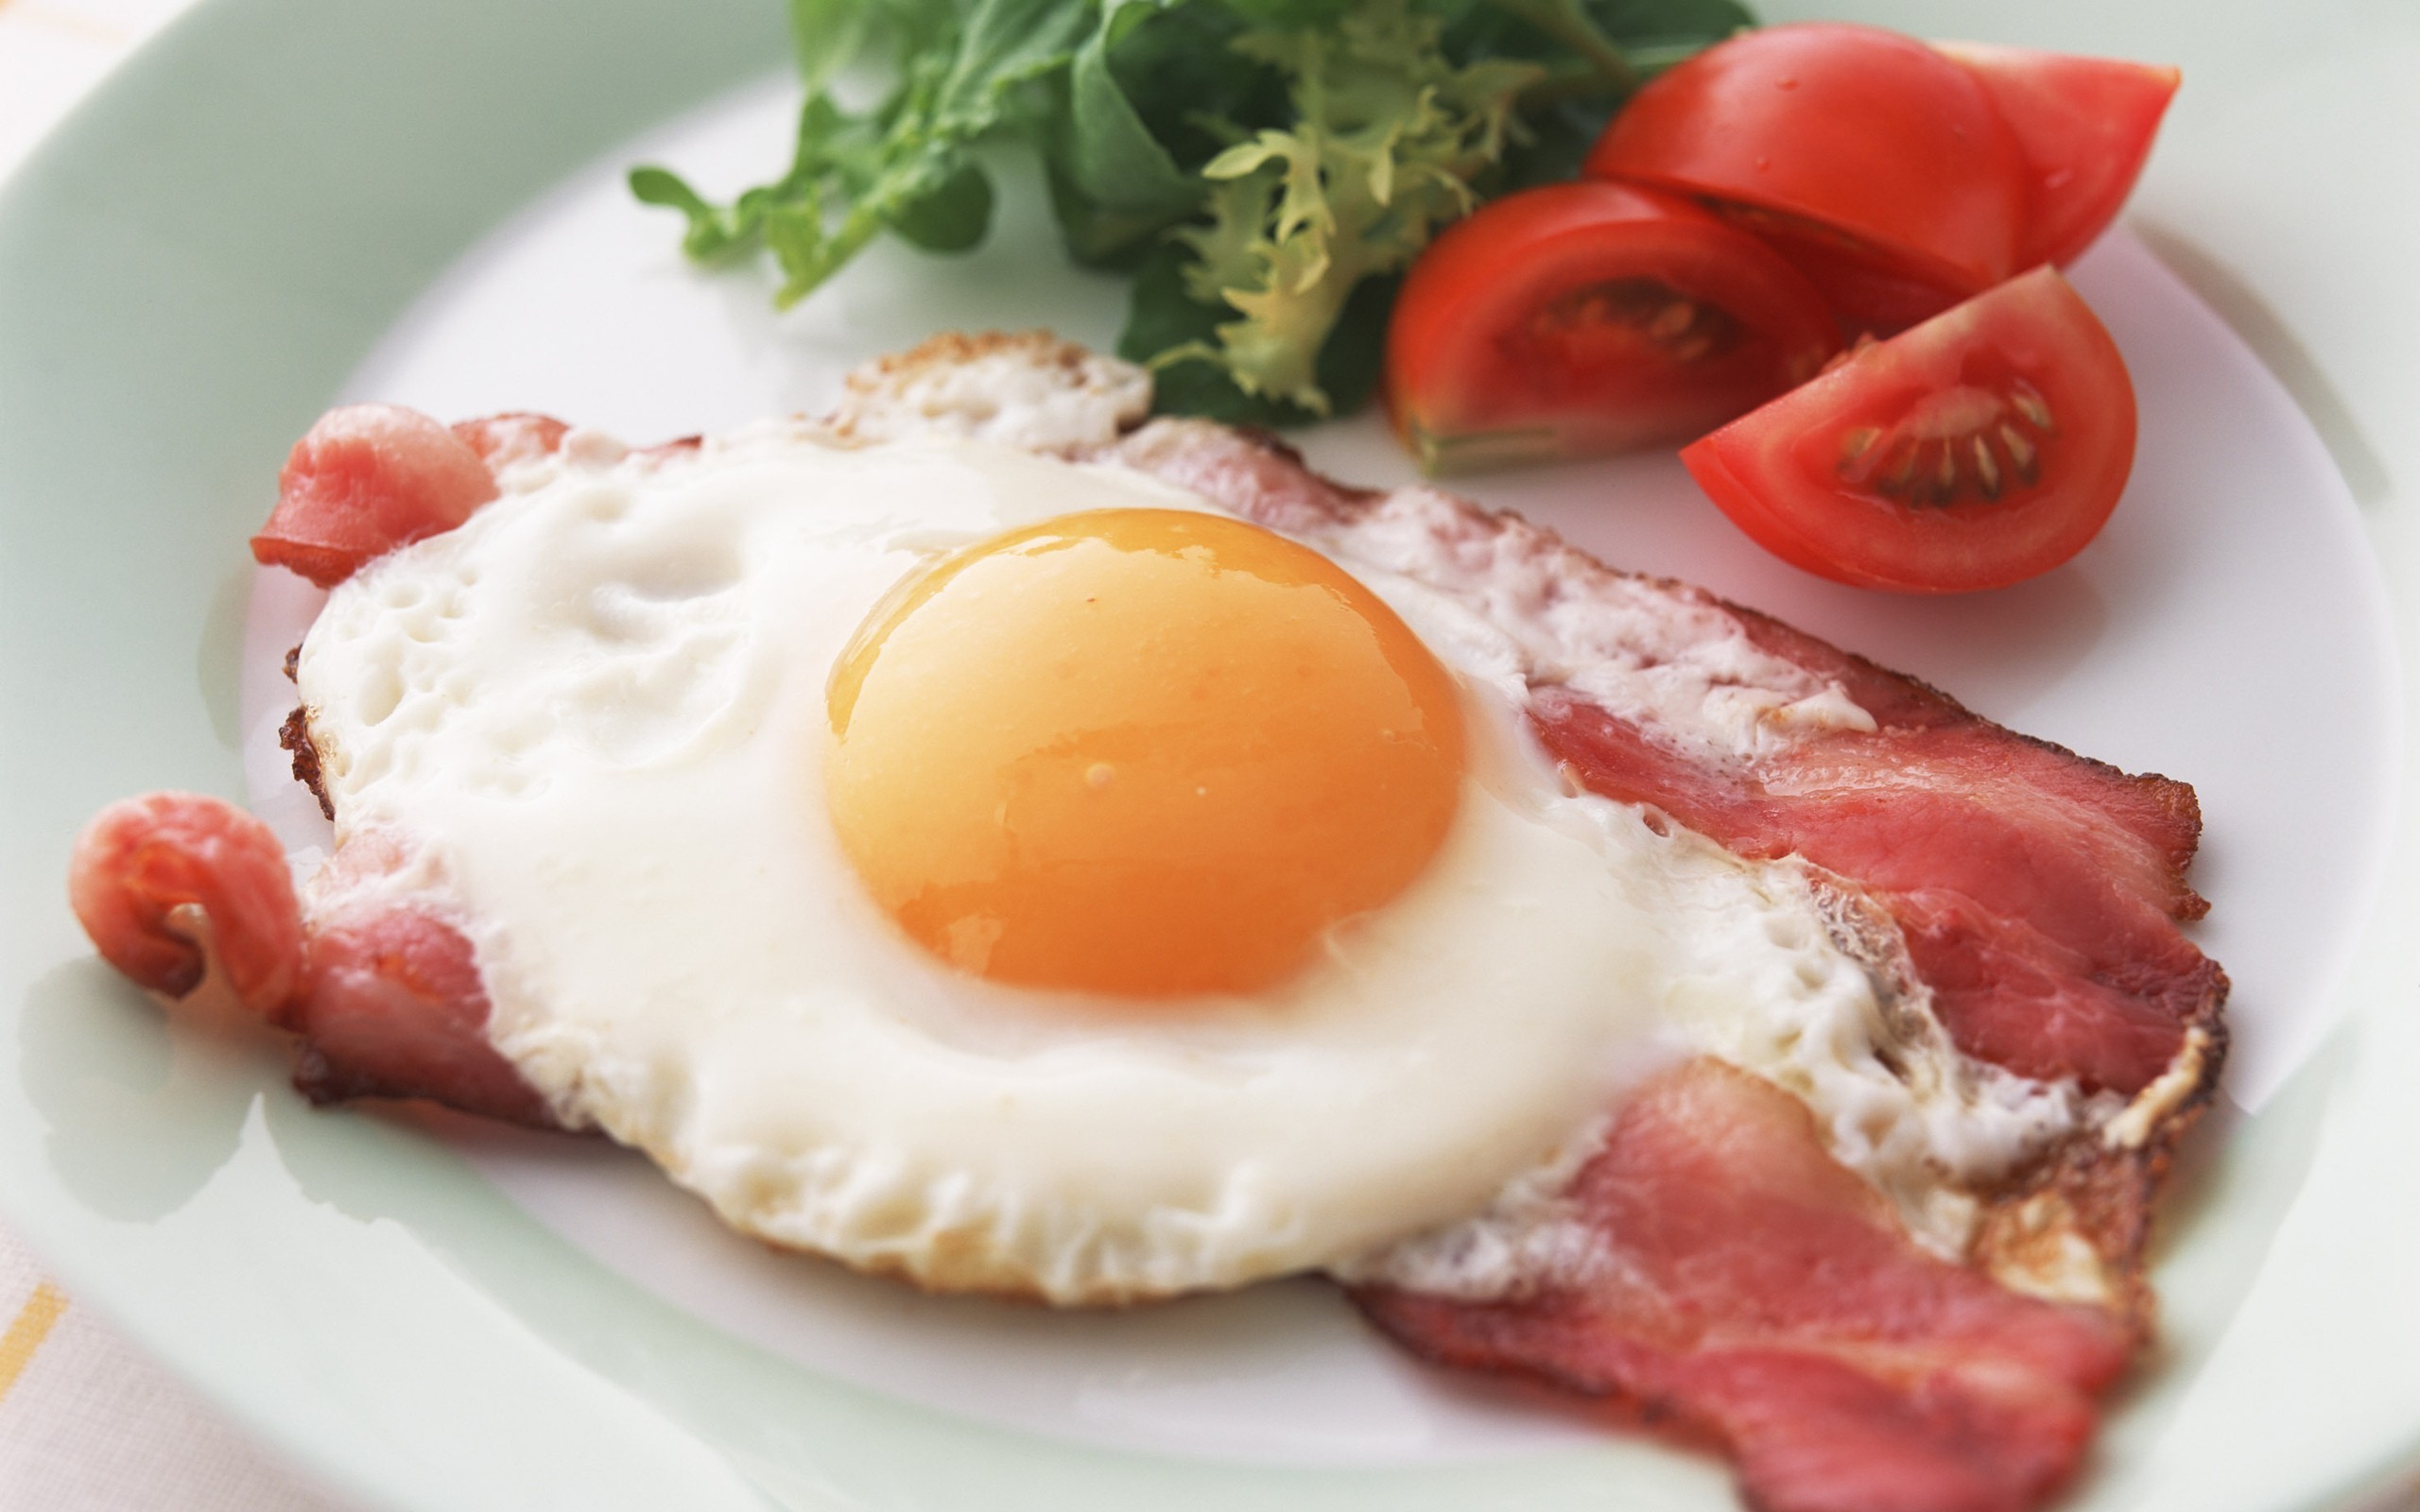 General 2560x1600 eggs bacon breakfast food tomatoes salad